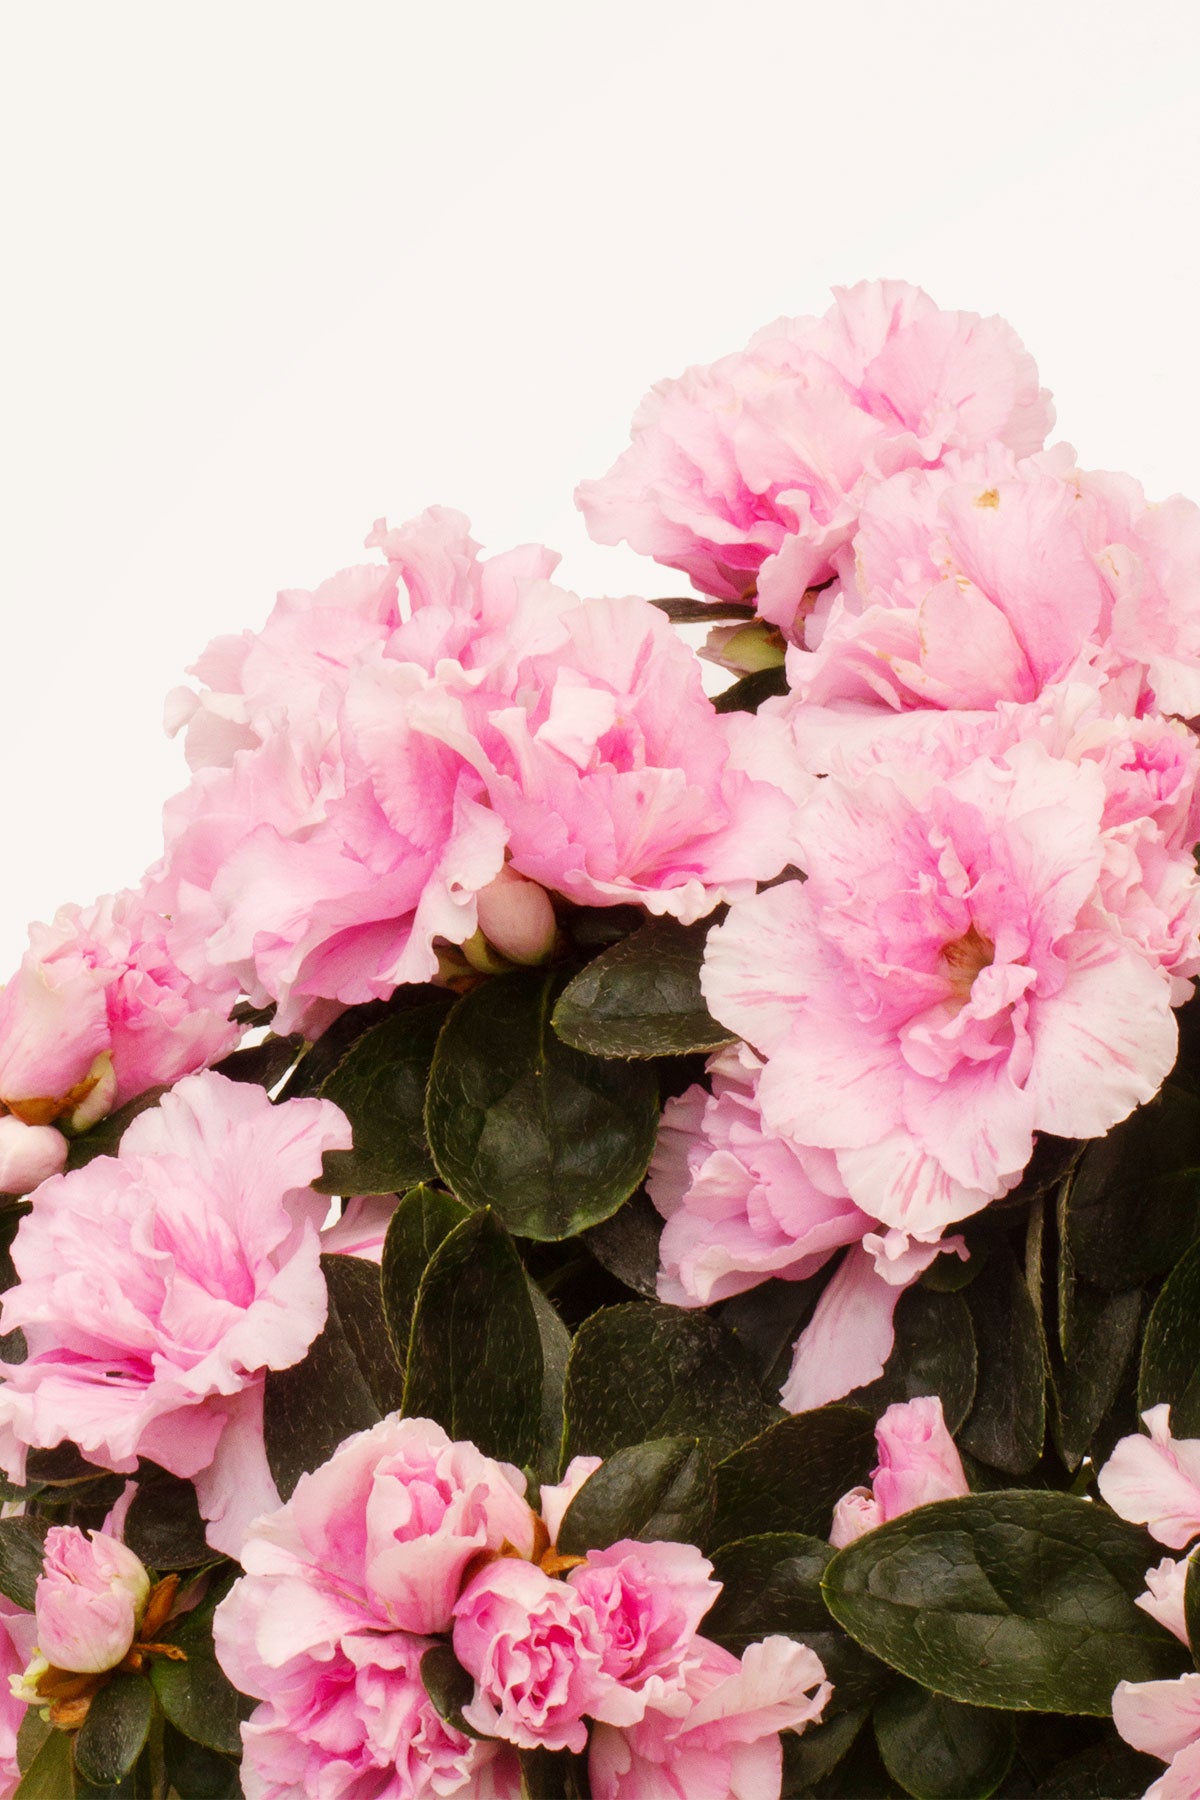 Comprar Azalea Rosa (Rhododendron) online | April Plants | APRILPLANTS